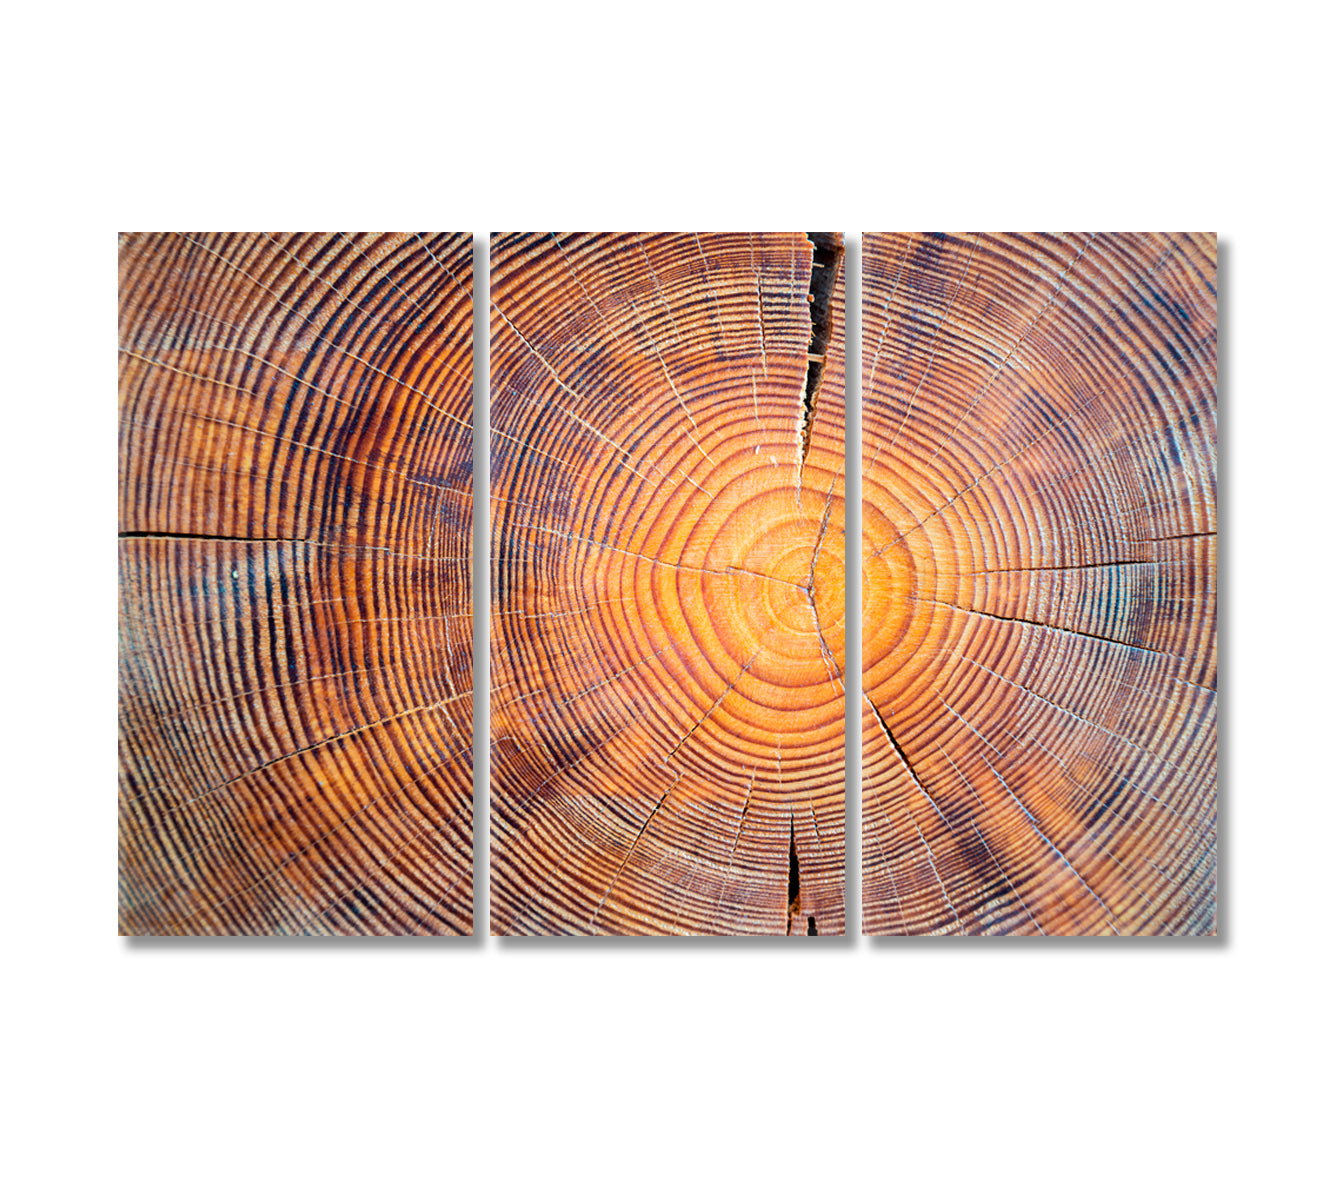 Old Cracked Log Canvas Print-Canvas Print-CetArt-3 Panels-36x24 inches-CetArt